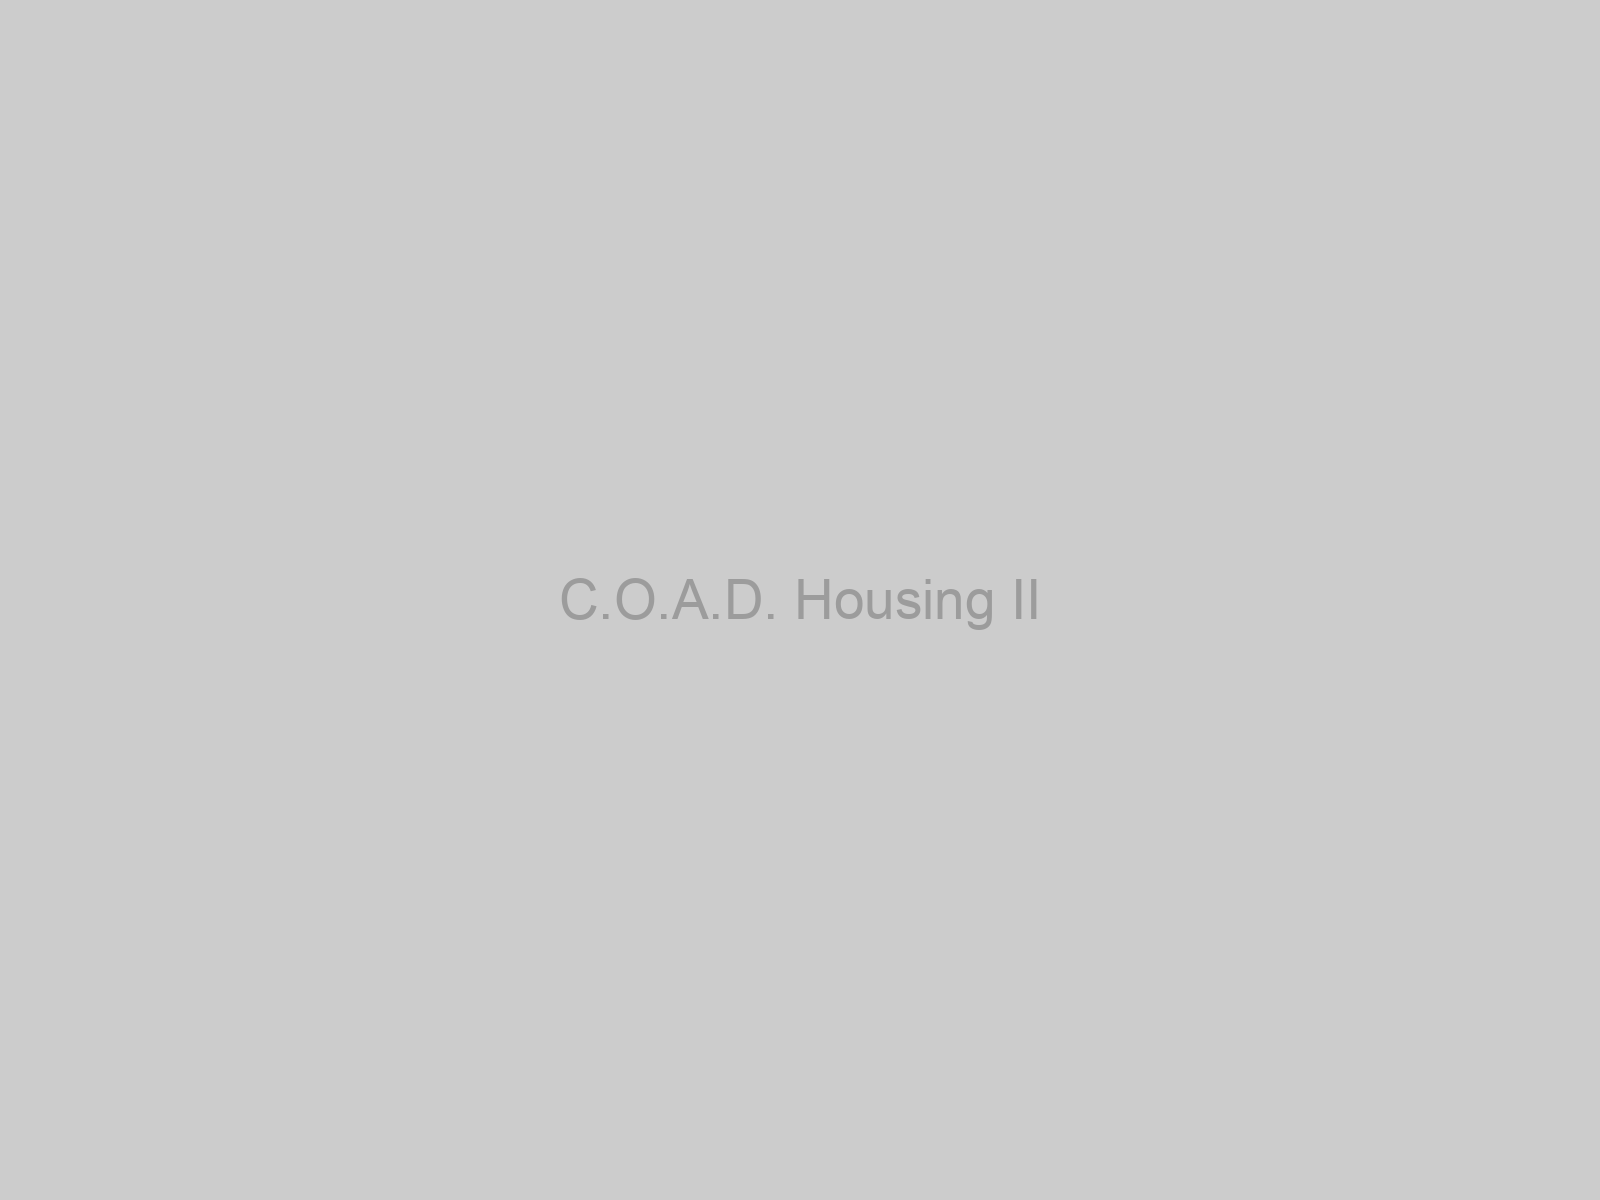 C.O.A.D. Housing II